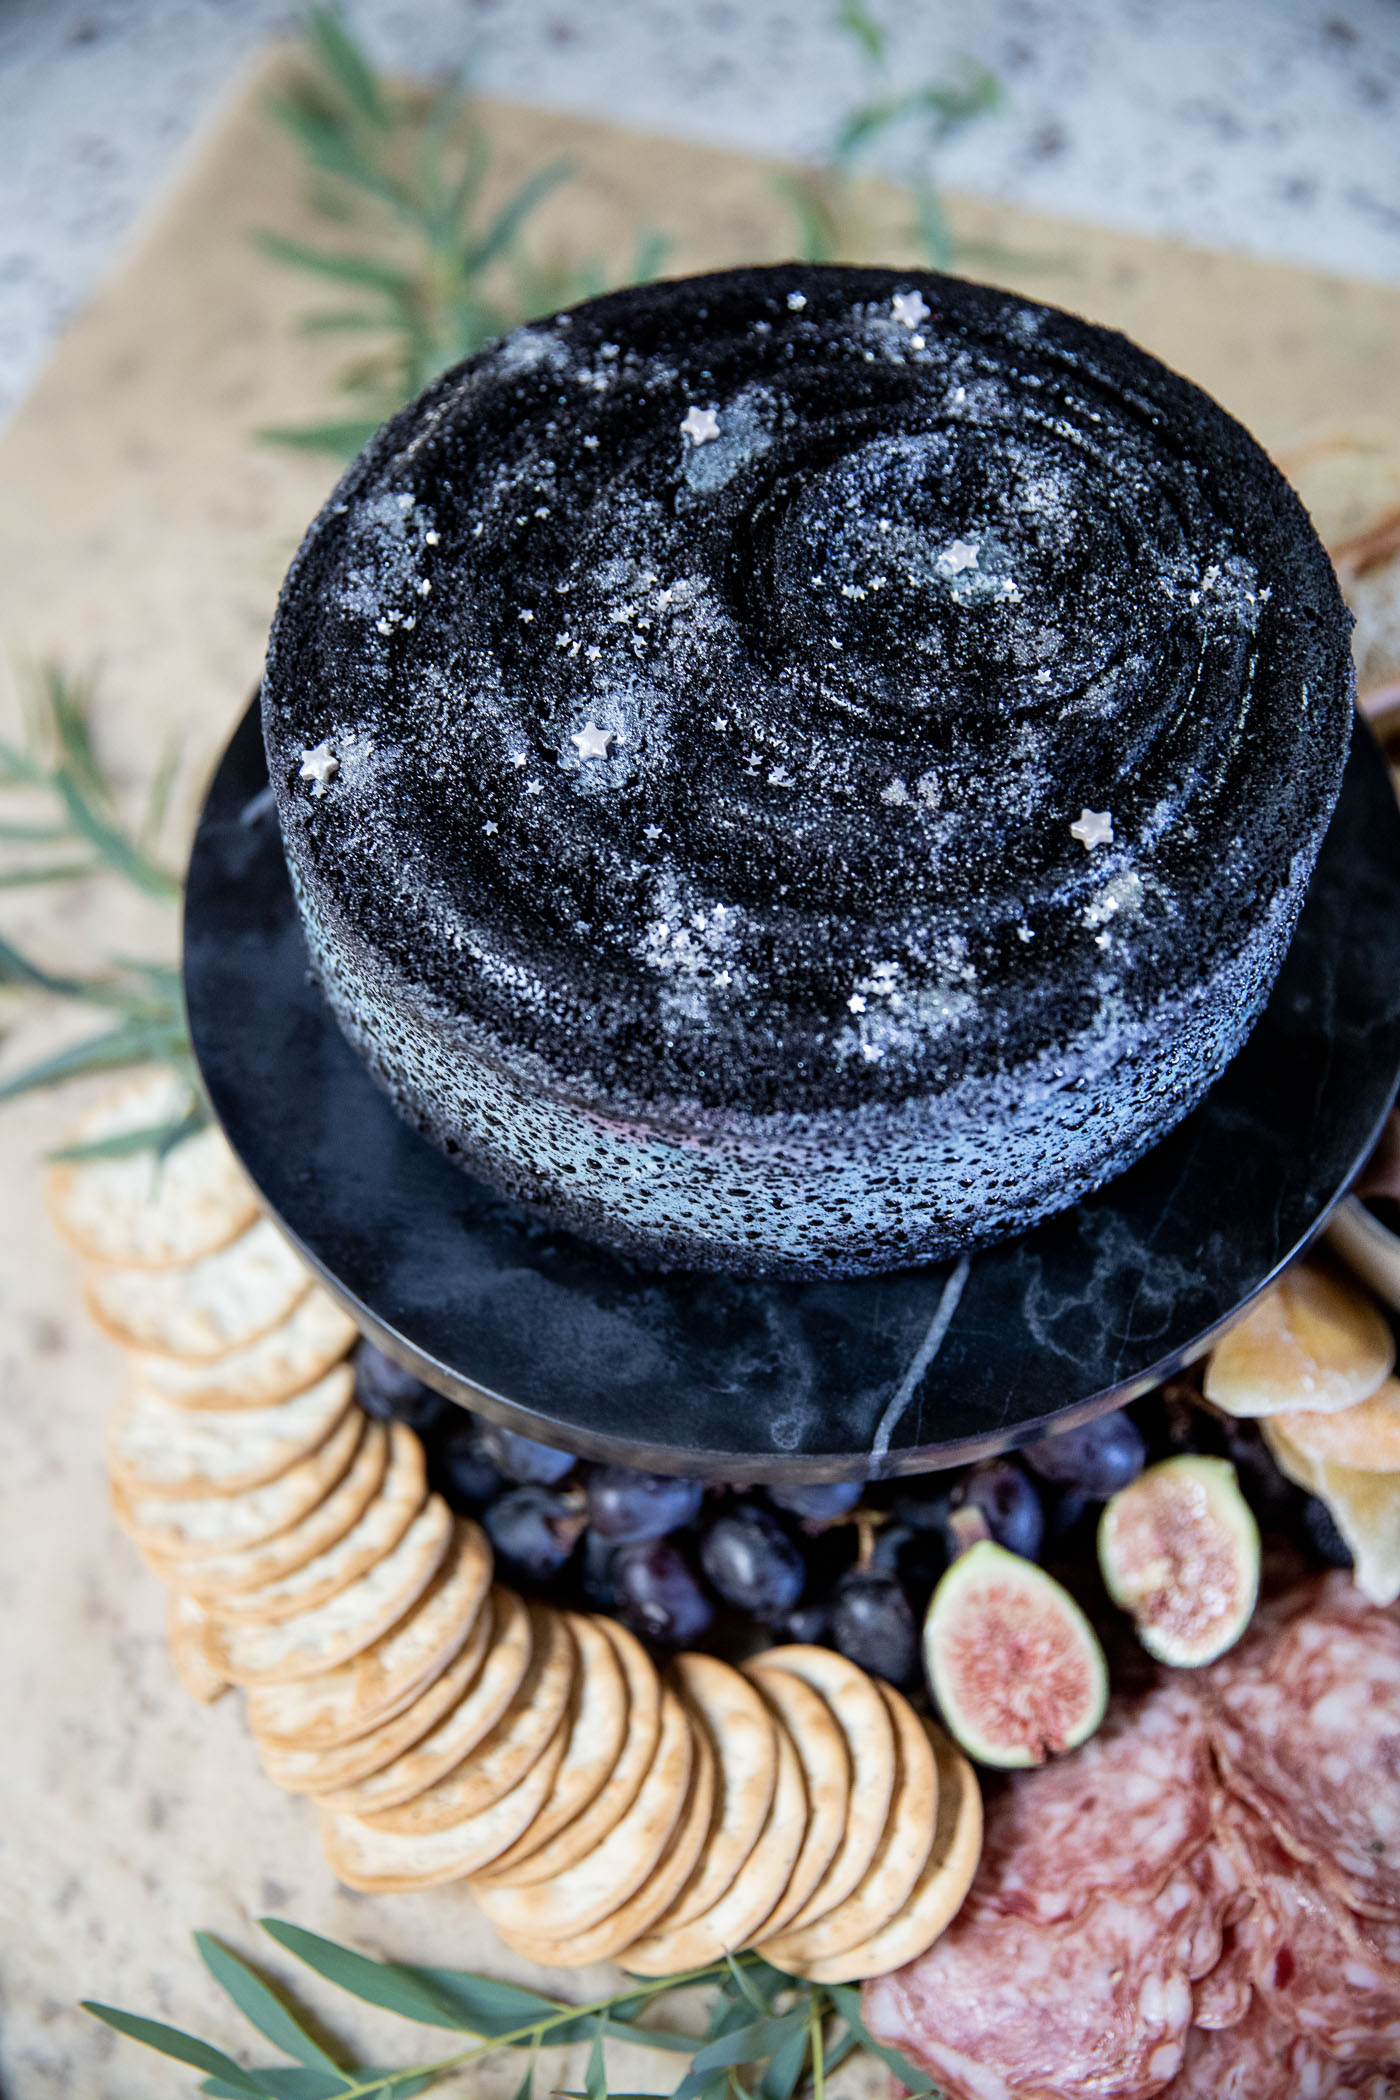 Black hole inspired birthday cake.